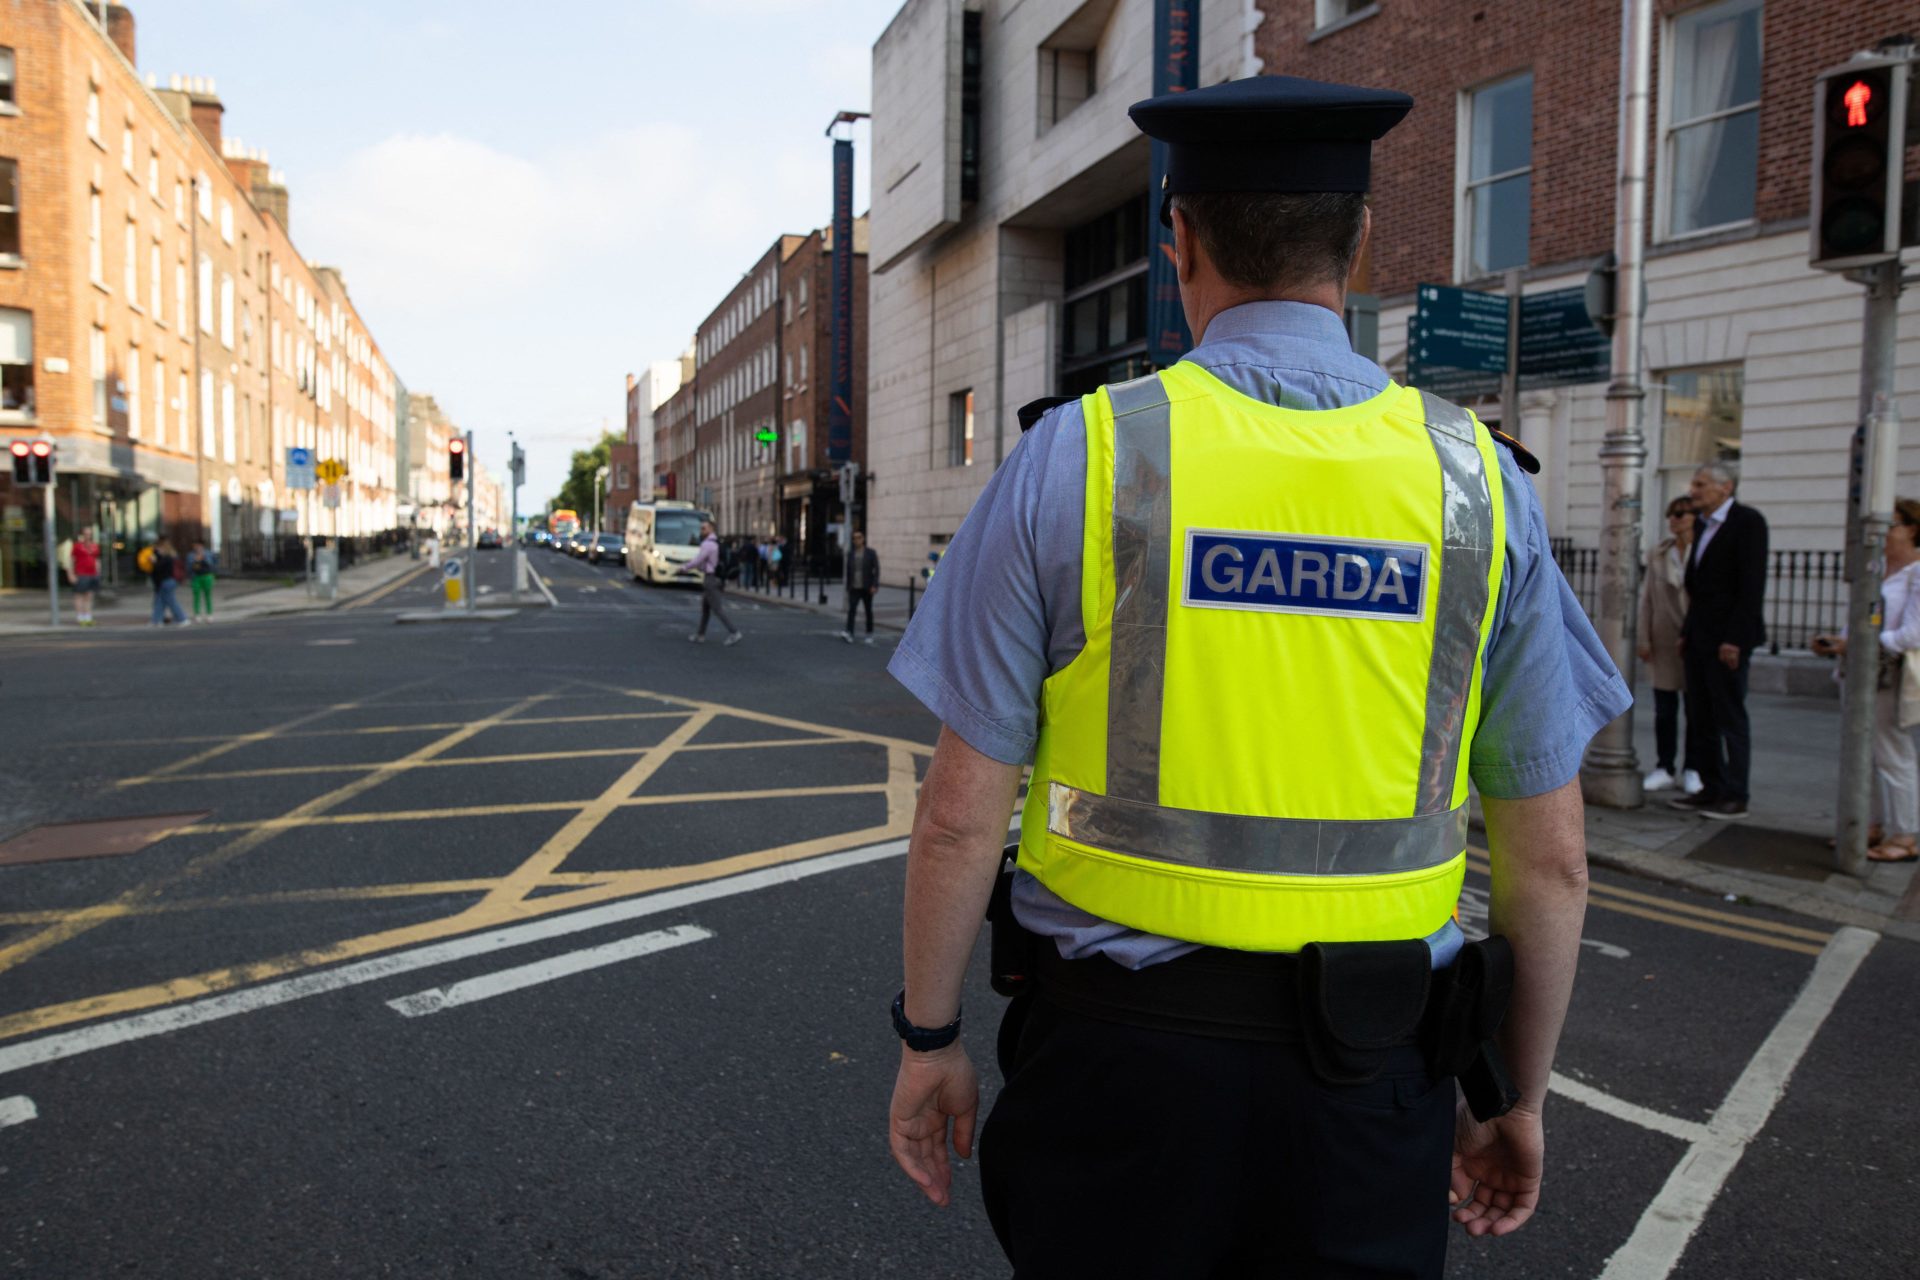 A garda on patrol in Dublin City Centre. Image: Abaca Press / Alamy Stock Photo